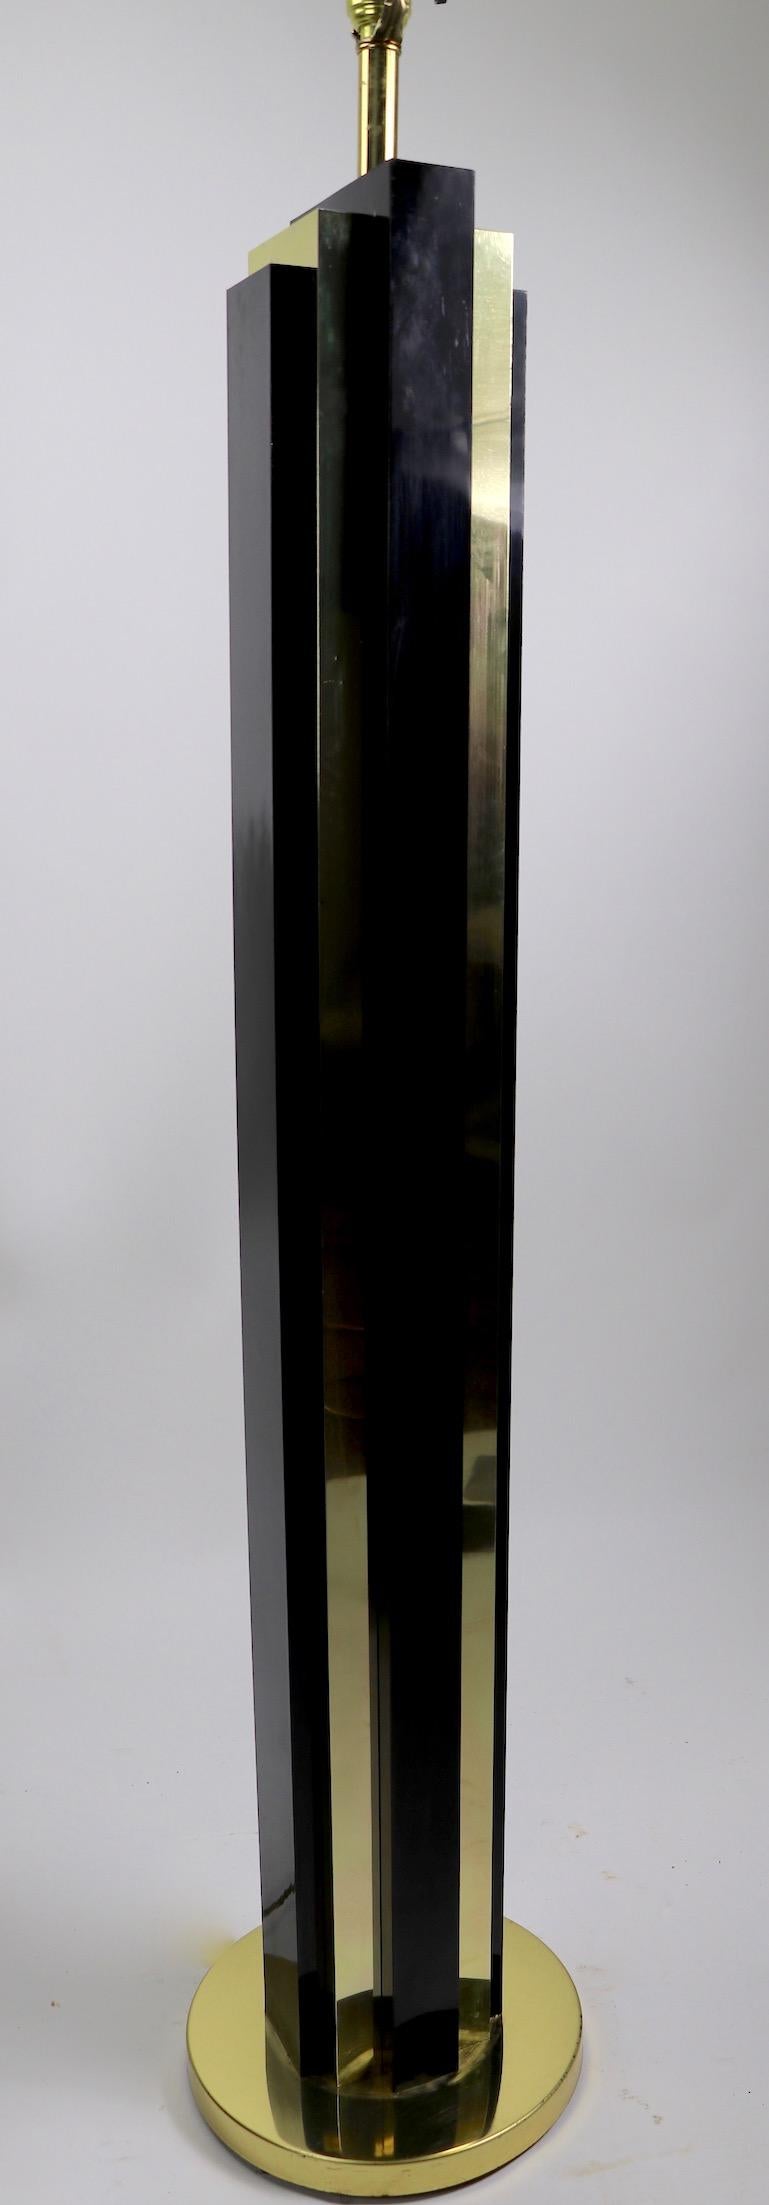 Brass and Black Skyscraper Floor Lamp after Springer For Sale 7